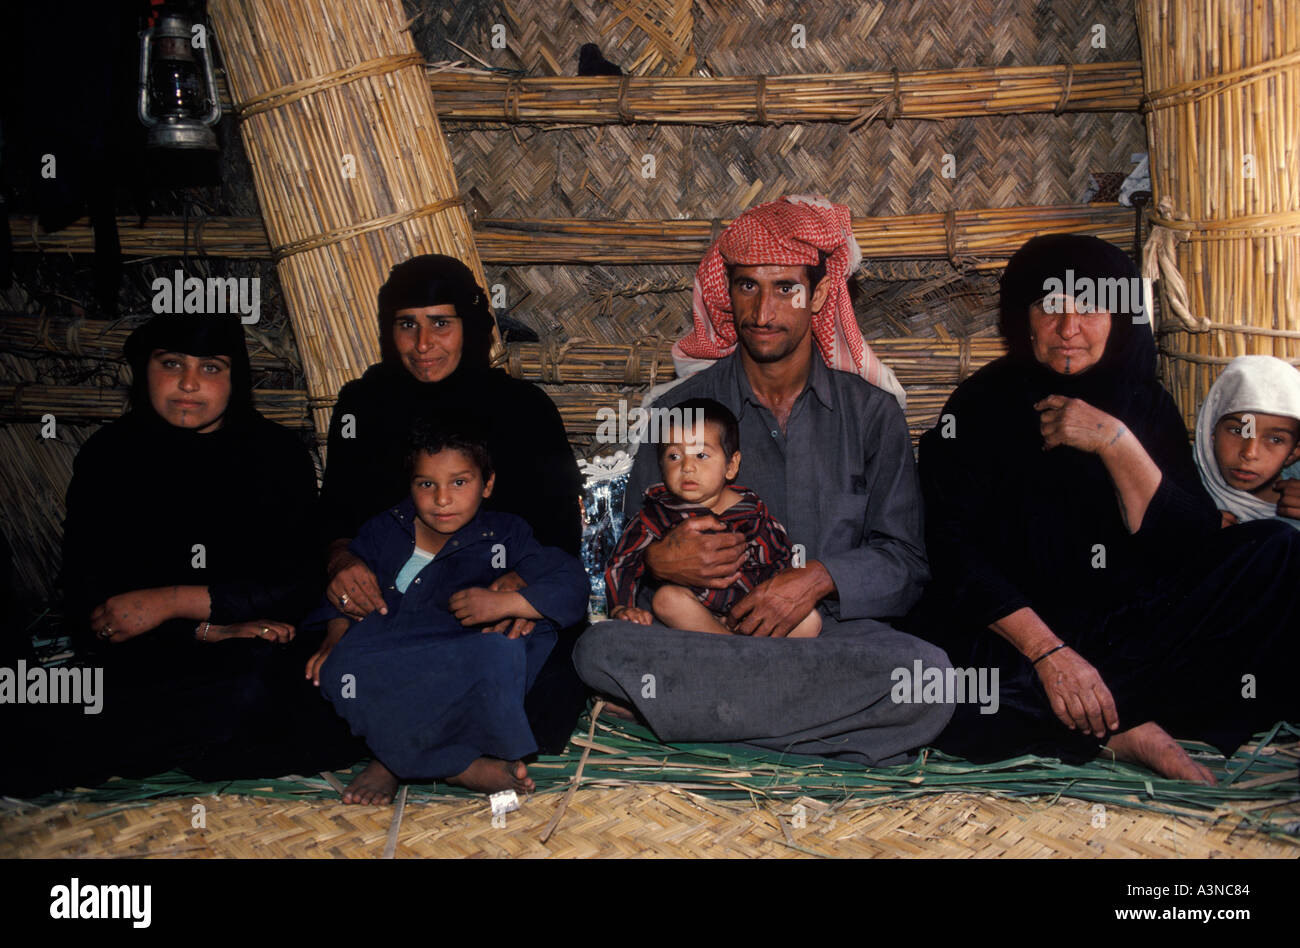 Polygame Familiengruppe Ehemann, zwei Frauen, Kinder und vier Kinder Marsh Arabs Iraqi 1984. Nahe Basra Südirak. 1980er HOMER SYKES Stockfoto